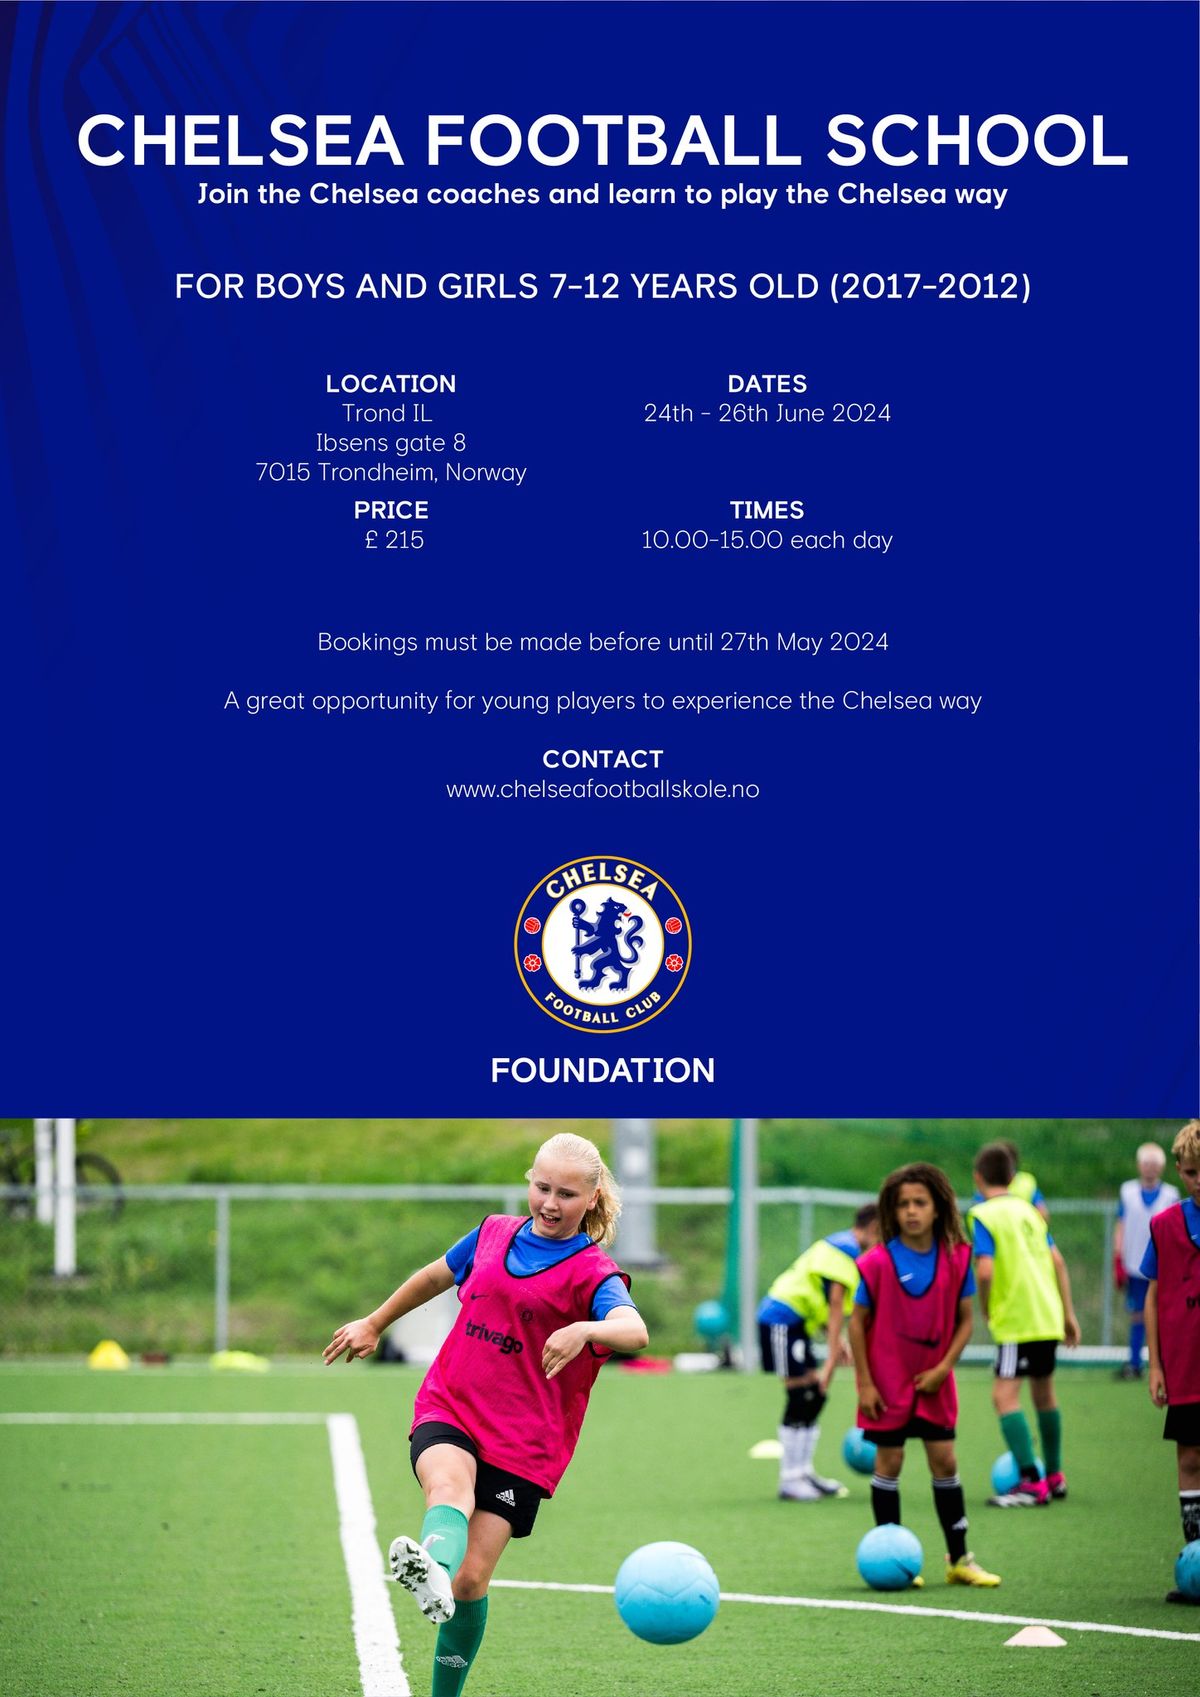 Chelsea Football School Trond IL 24th - 26th June 2024